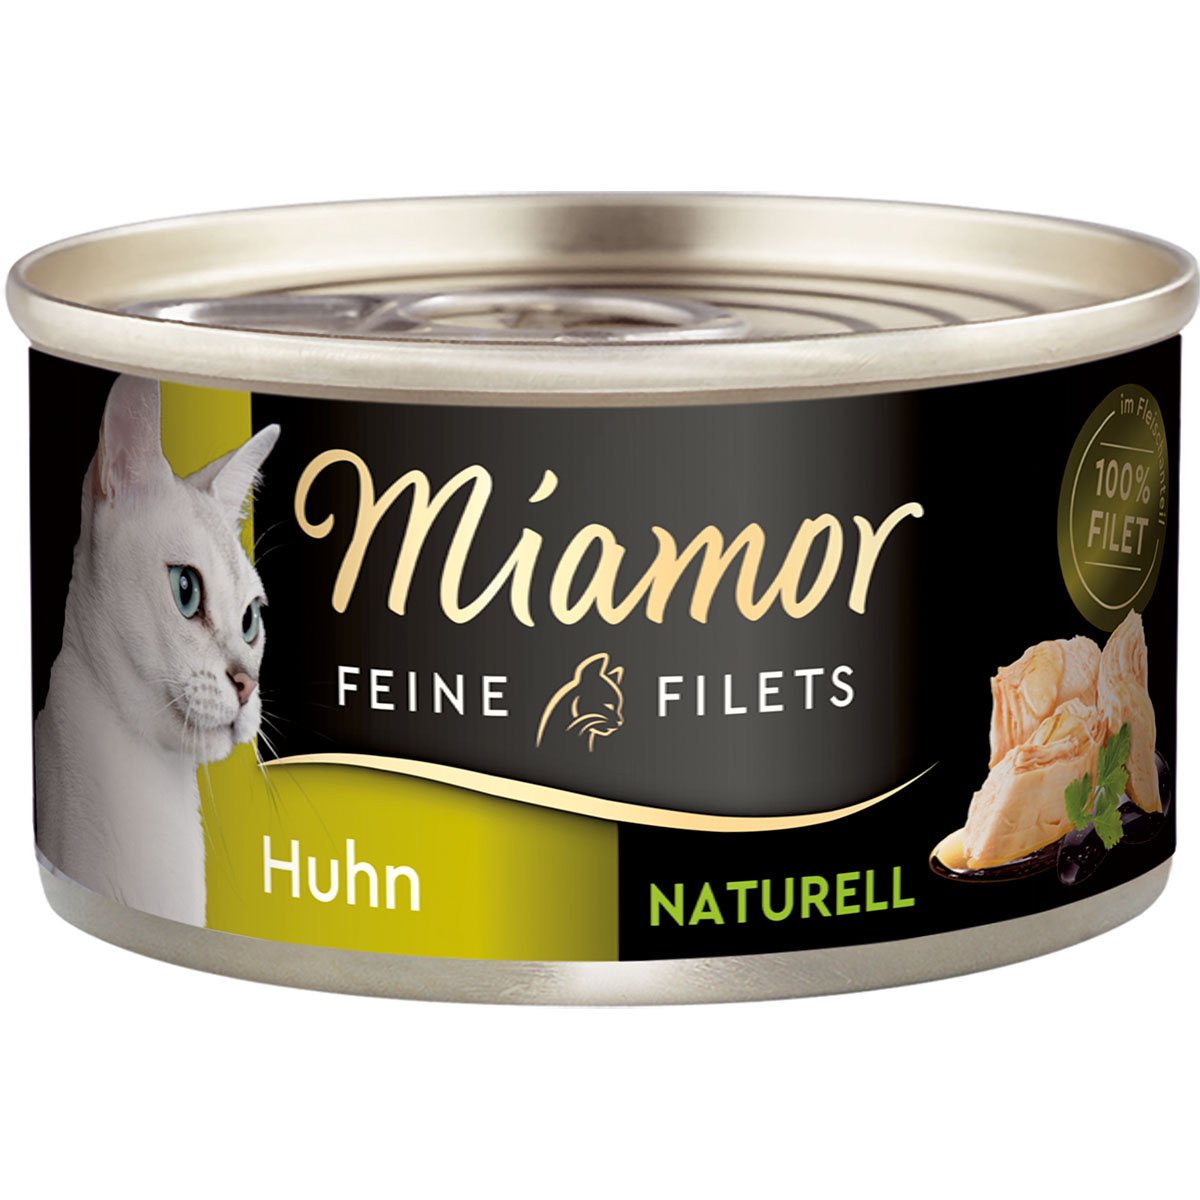 Miamor Feine Filets Naturelle Huhn Pur 80g Dose 24x80g von Miamor